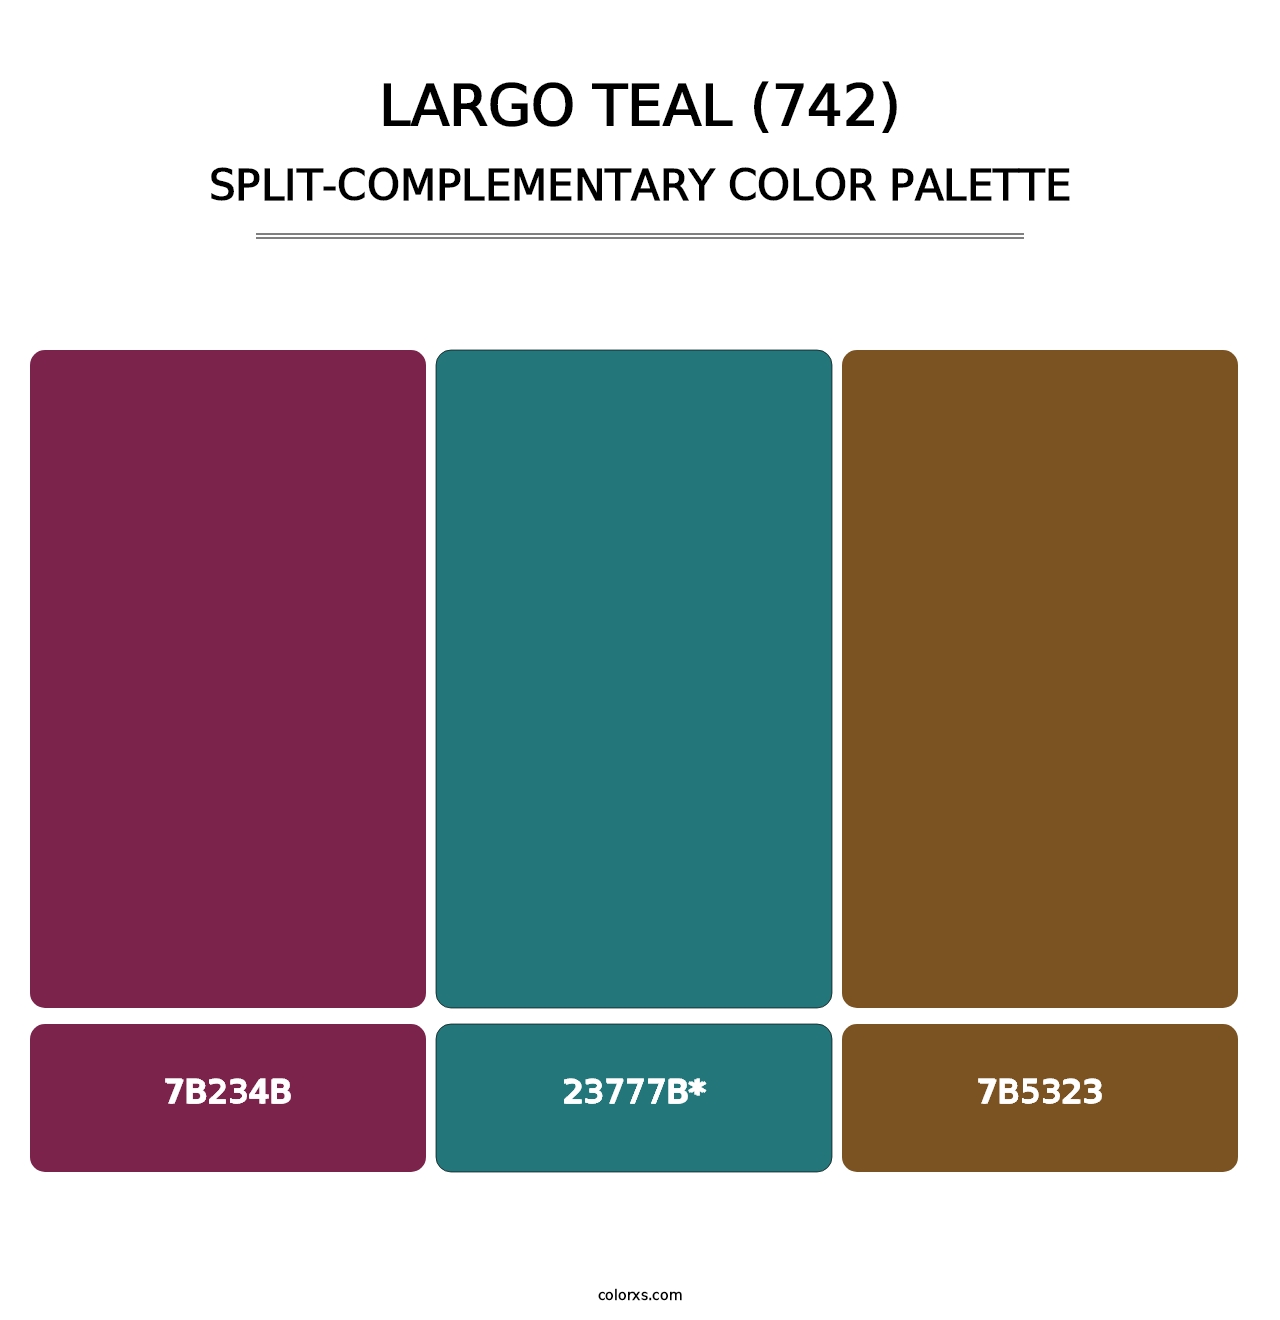 Largo Teal (742) - Split-Complementary Color Palette